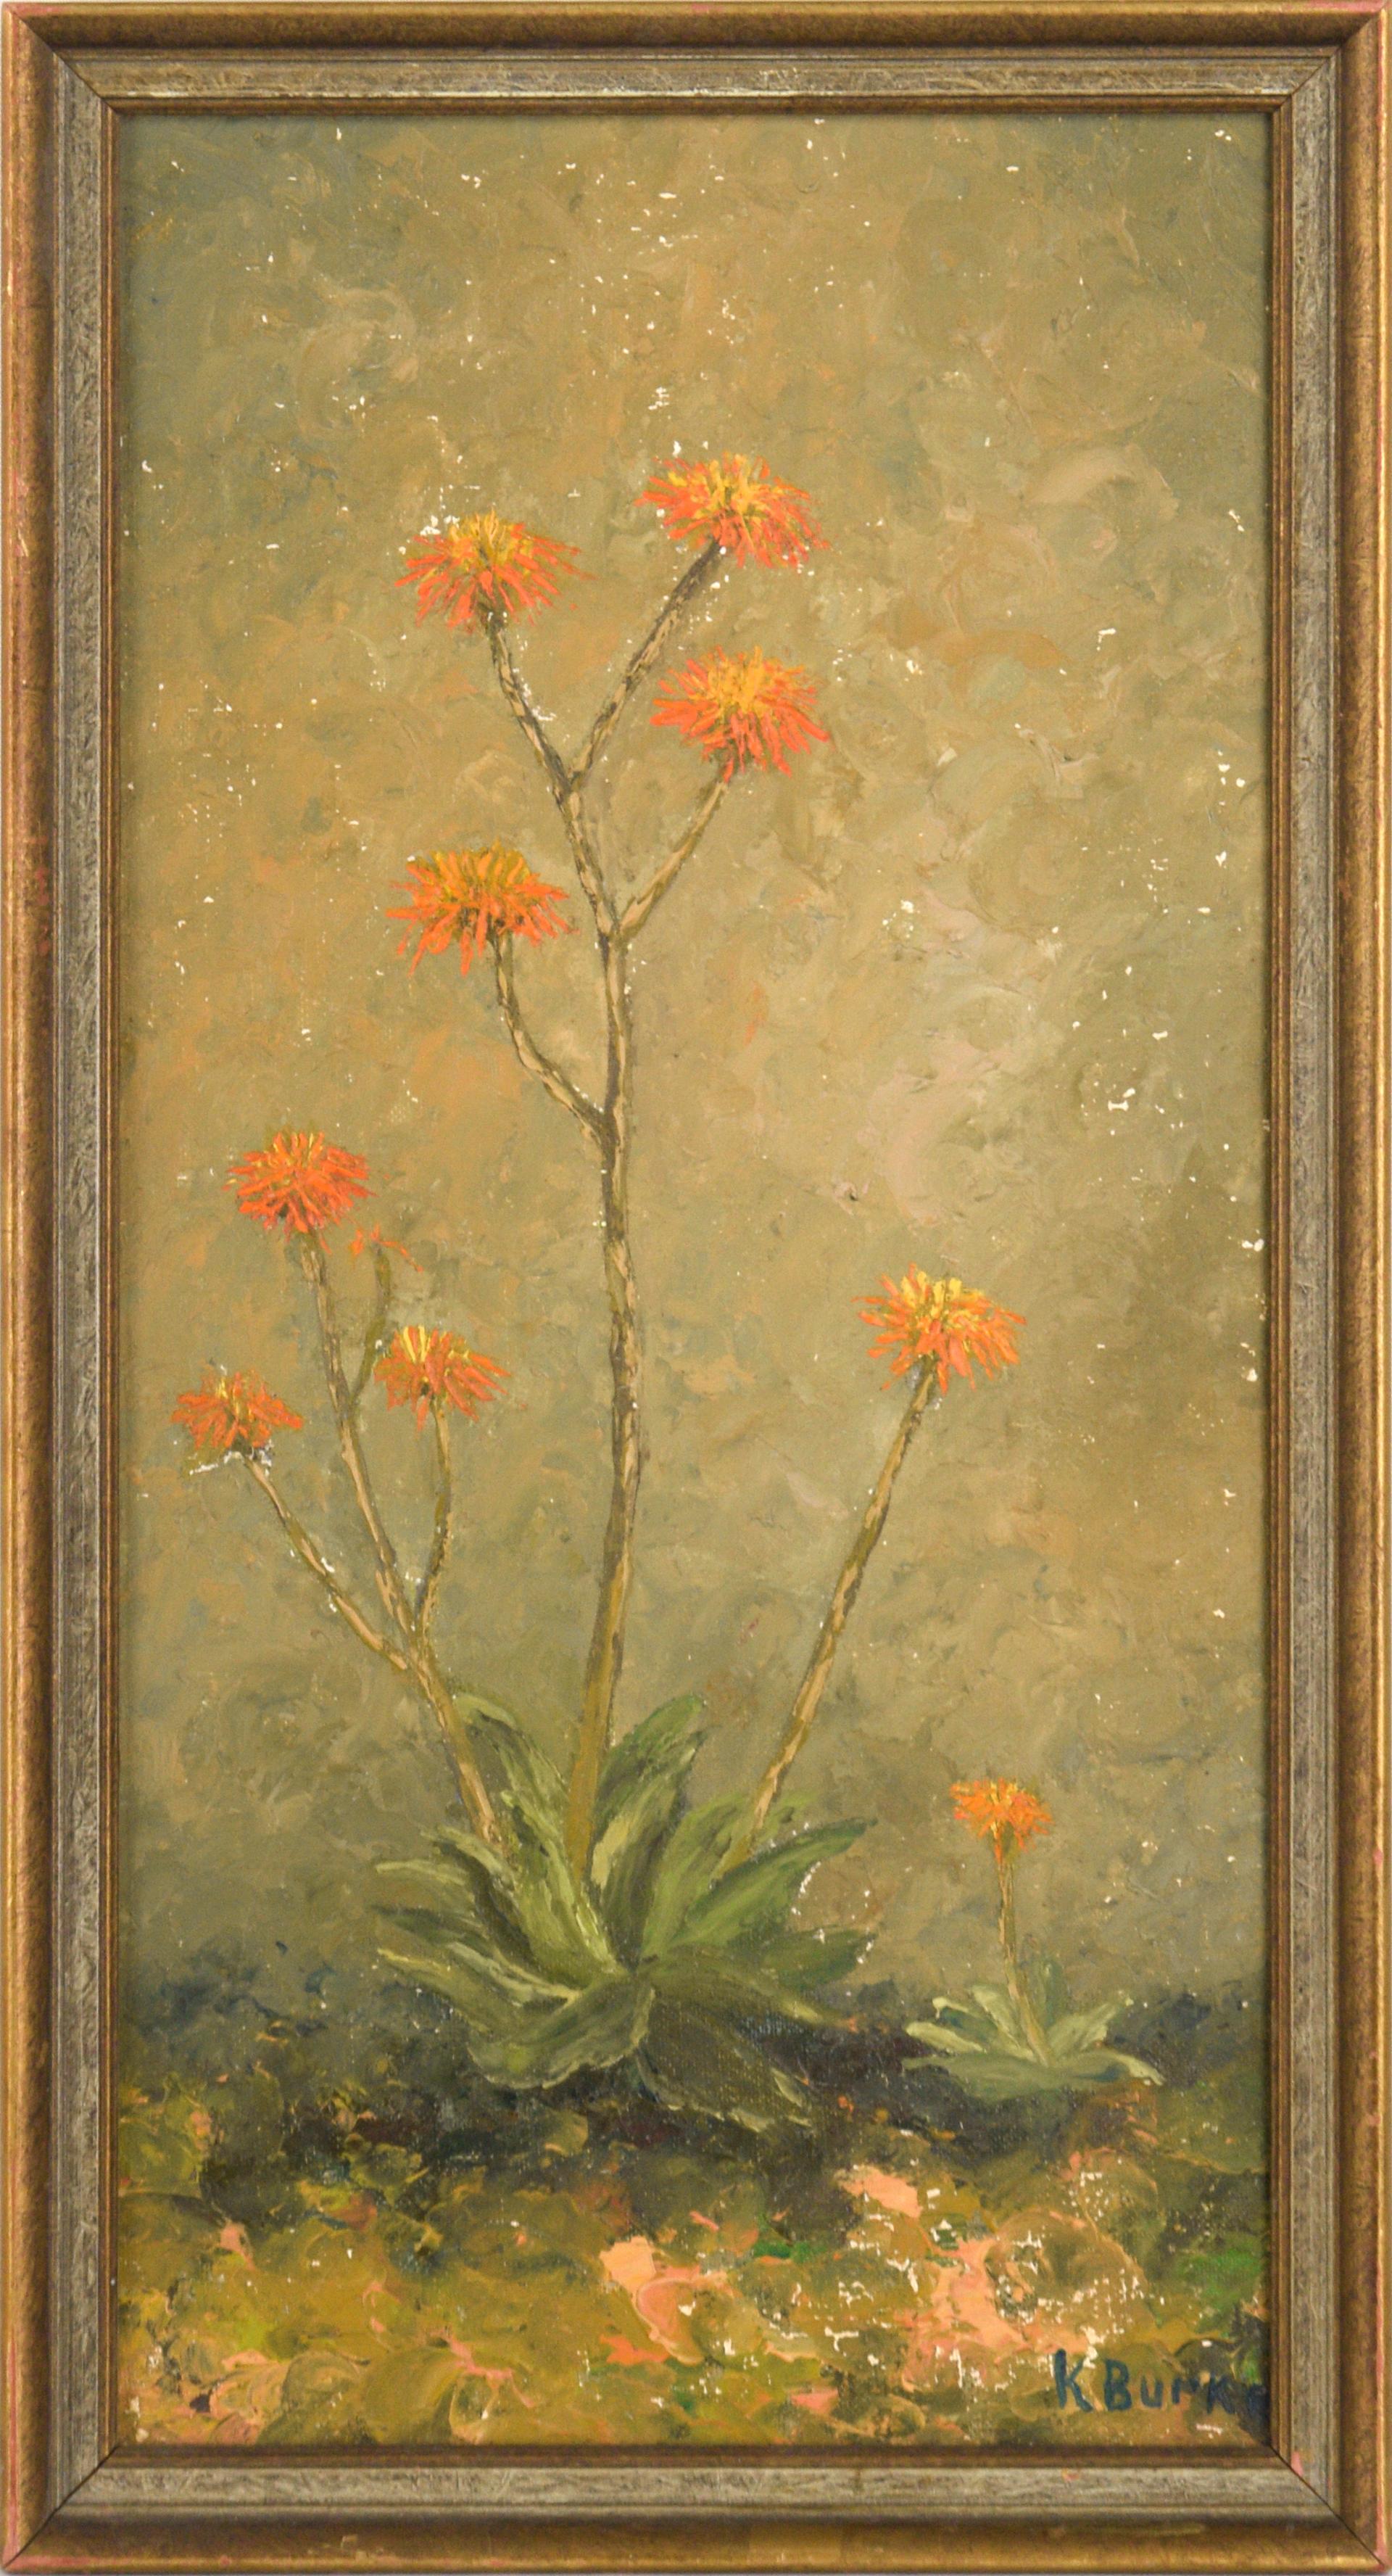 K Burke Landscape Painting - Coral Aloe in Bloom - Botanical Study